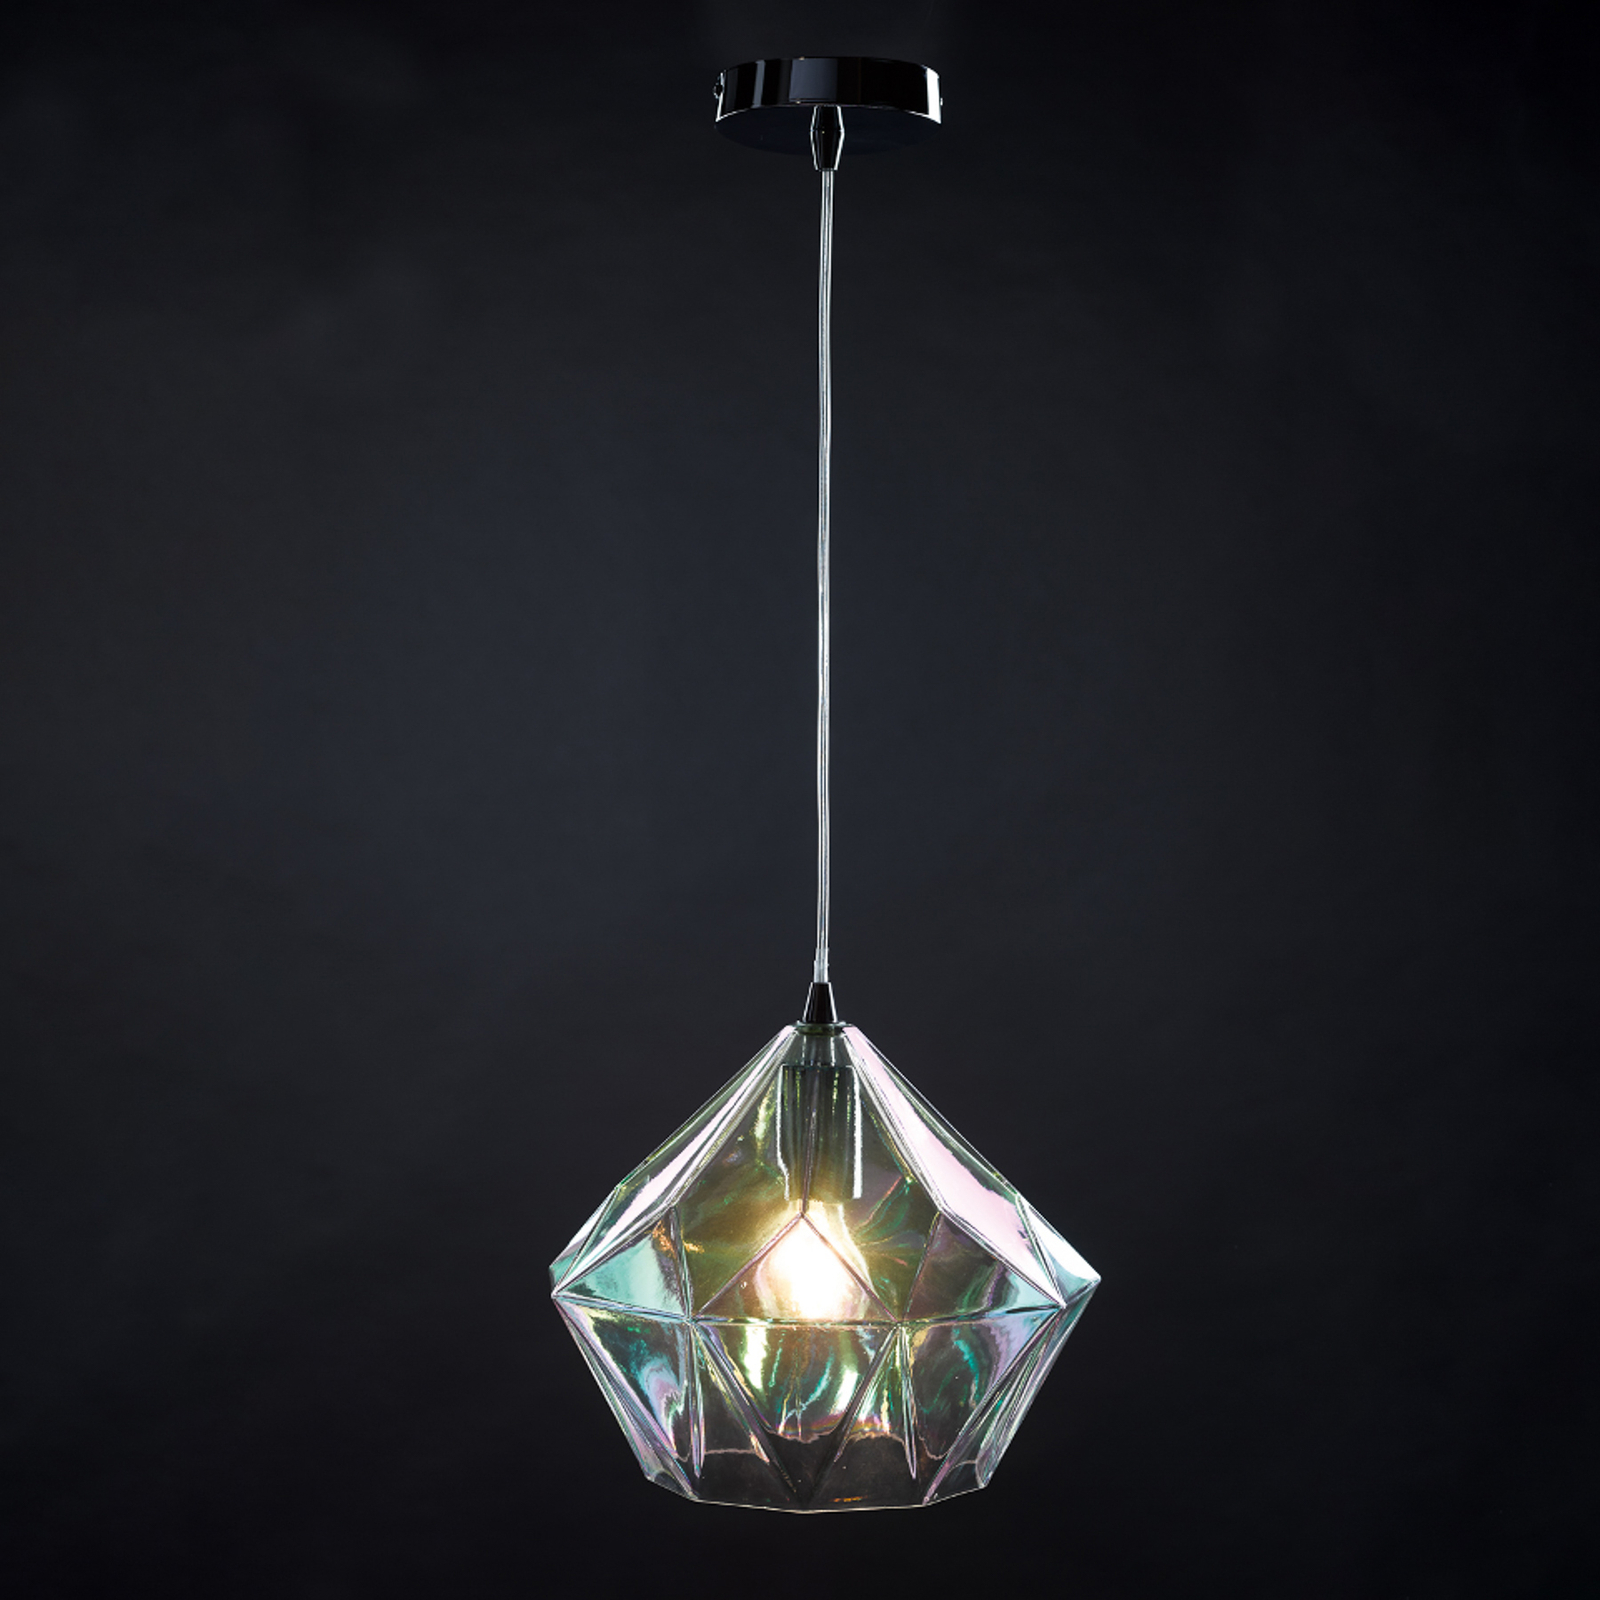 Gaia pendant light with iridescent glass shade